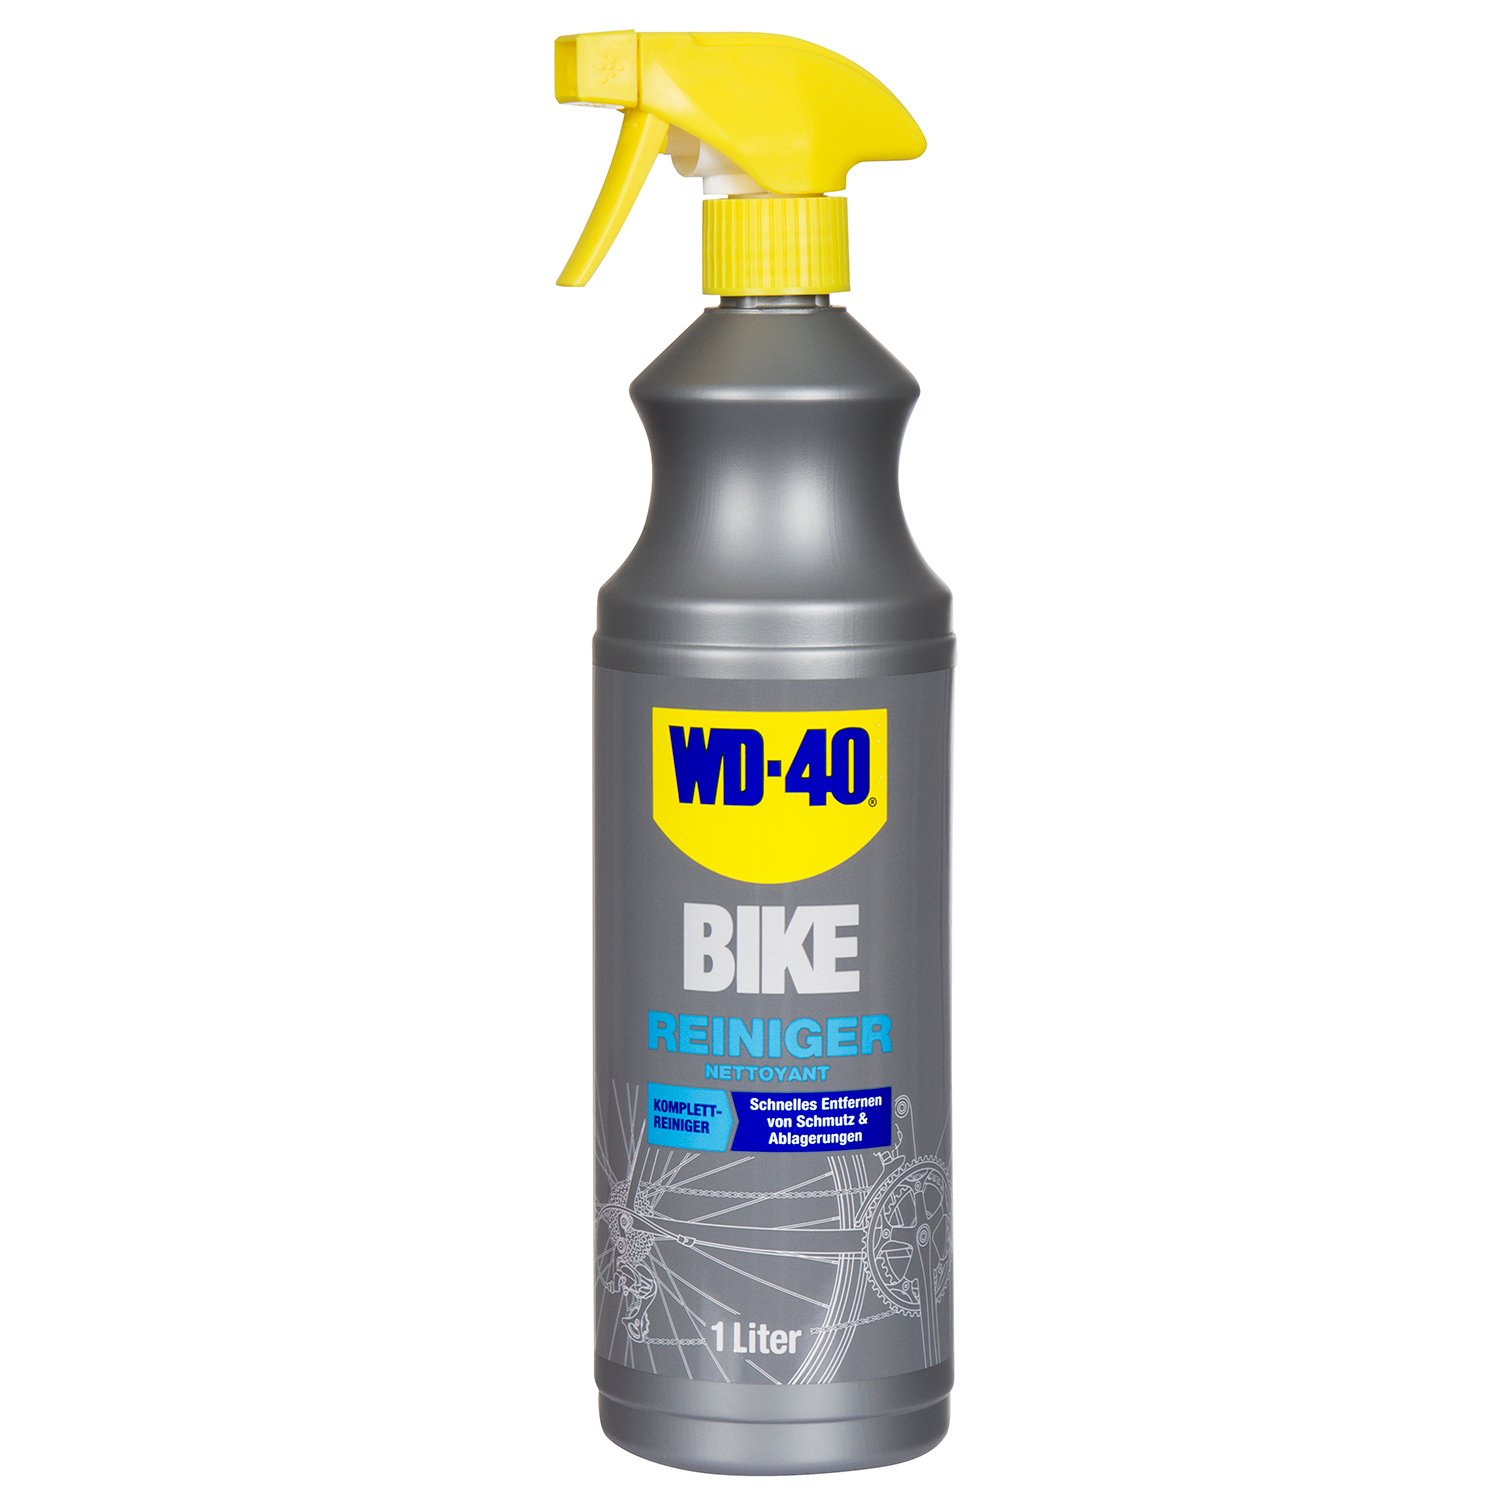 WD-40 Bike Cleaner  Spray Bottle, 1 Liter